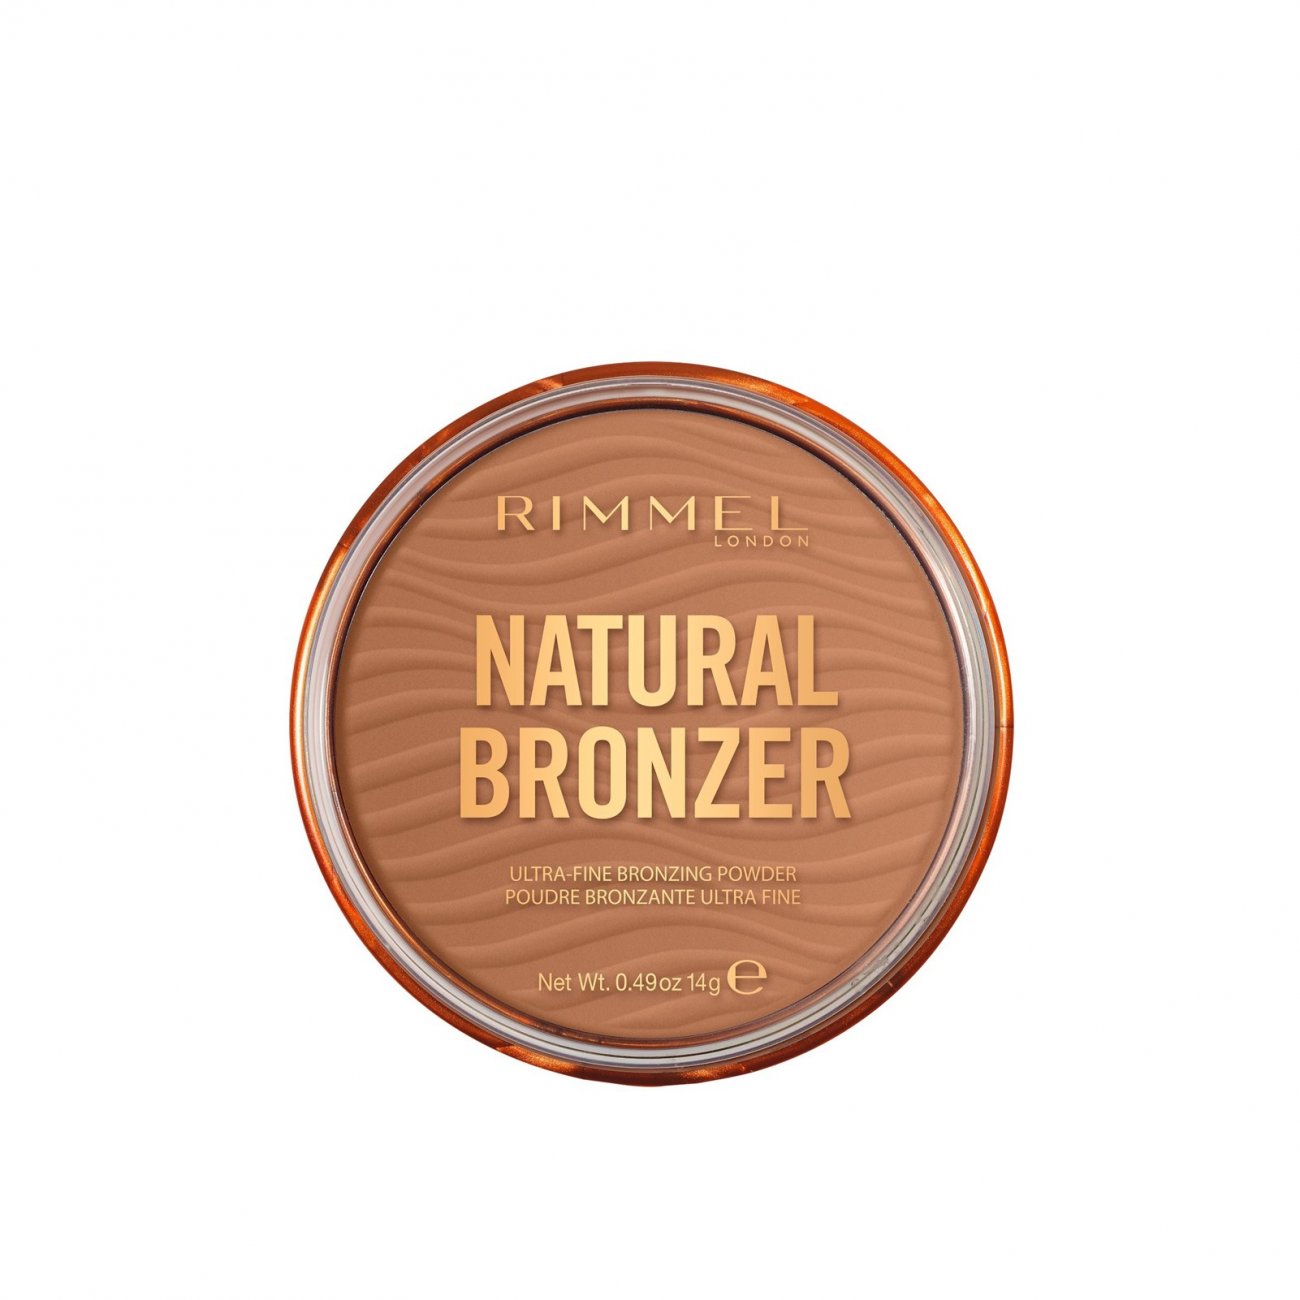 Buy Rimmel Natural Bronzer Waterproof Bronzing Powder SPF15 002 14g · USA